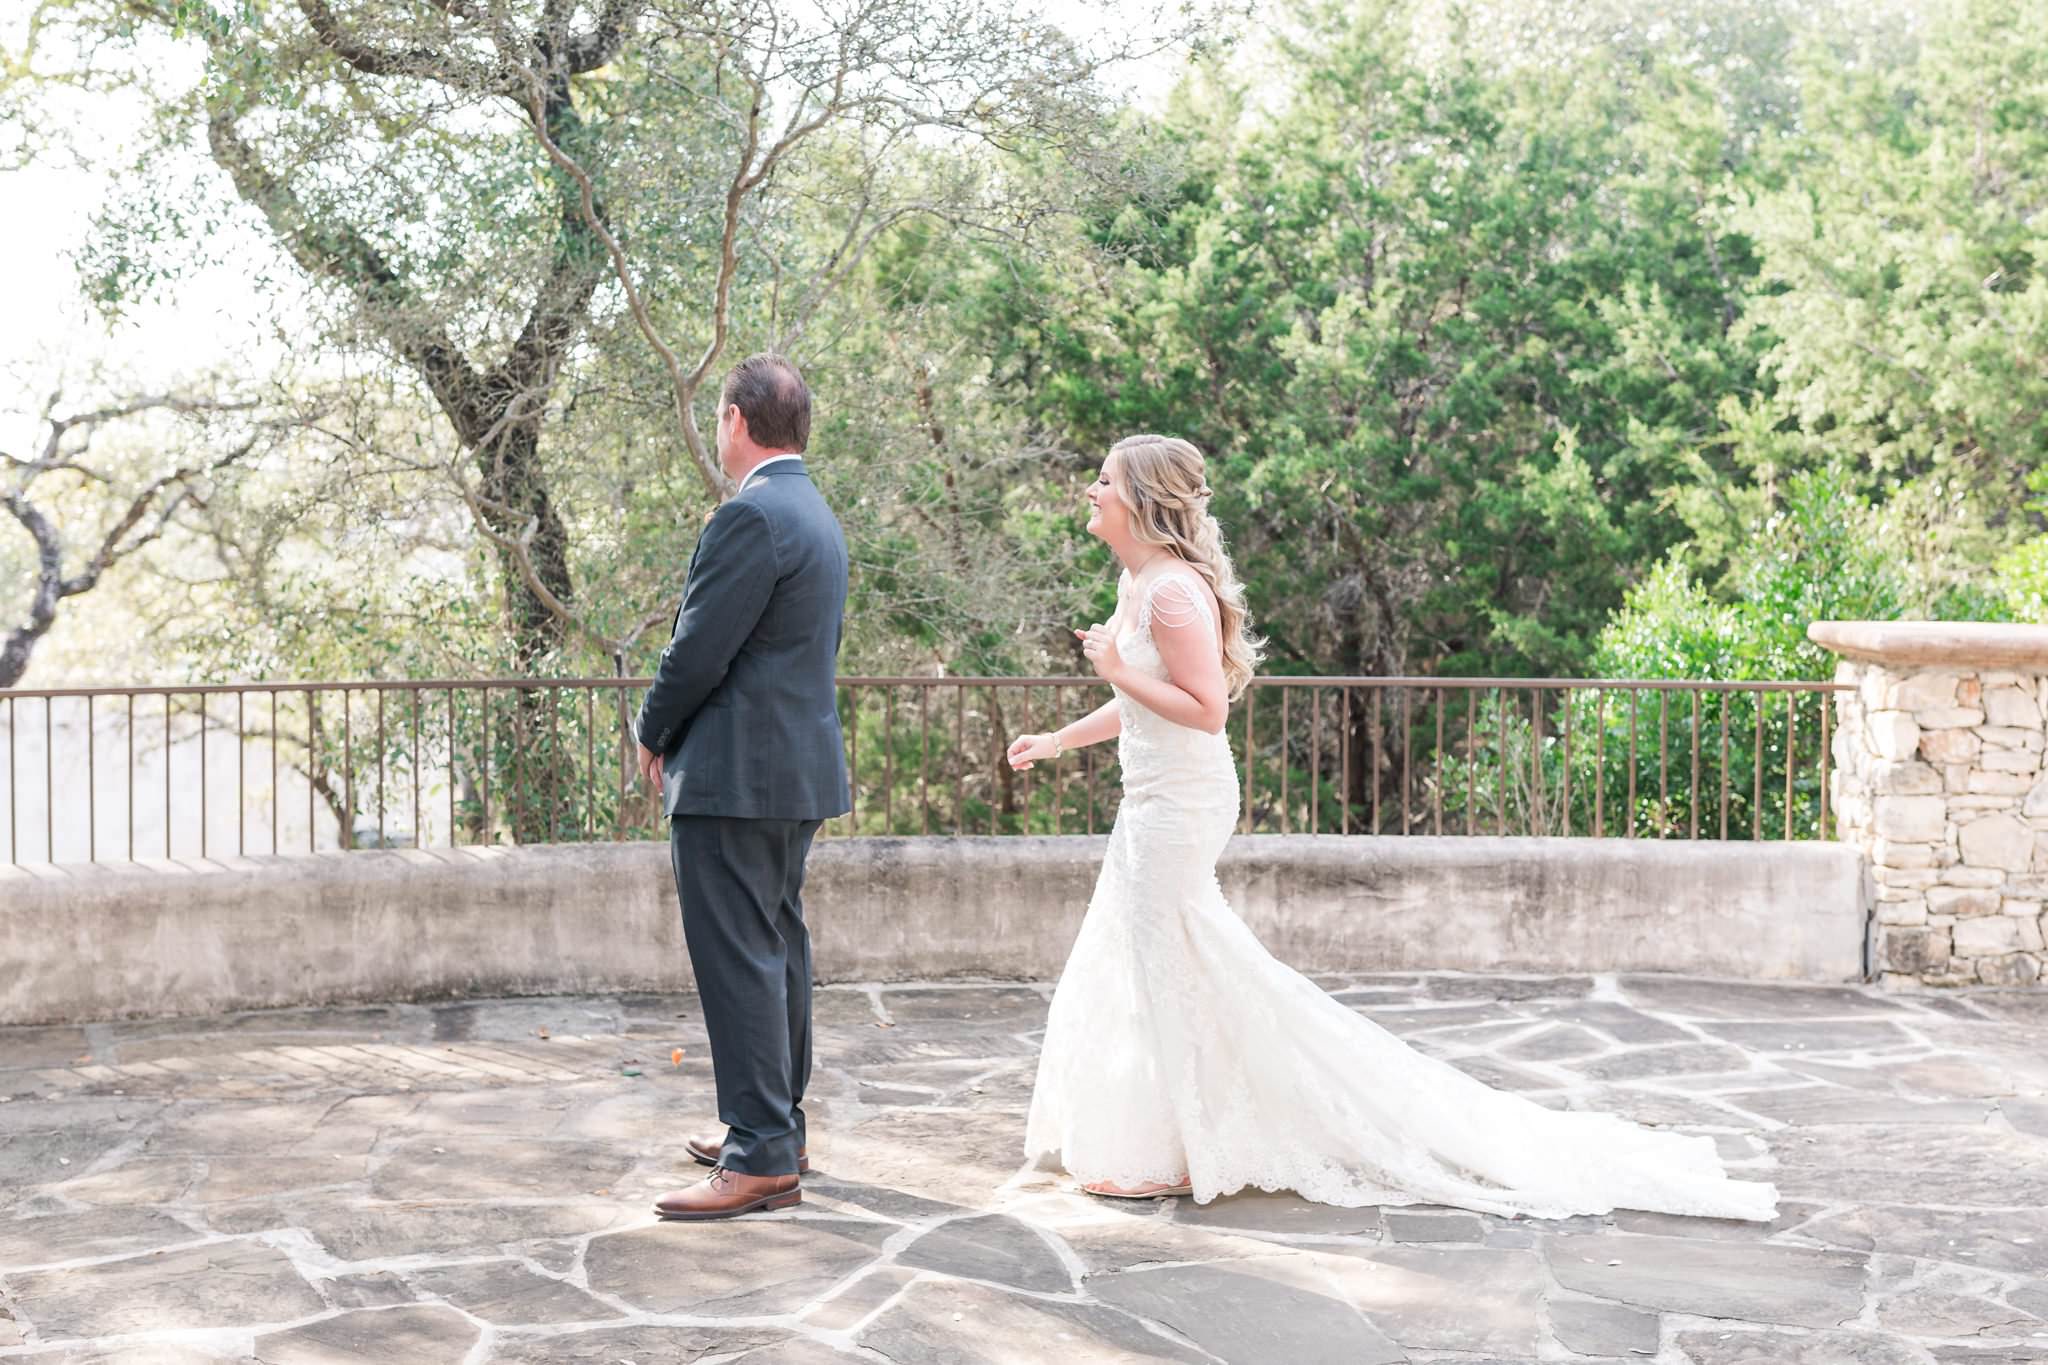 An Emerald Green, Copper and Gold Wedding at Lost Mission in Spring Branch, TX by Dawn Elizabeth Studios, San Antonio Wedding Photographer